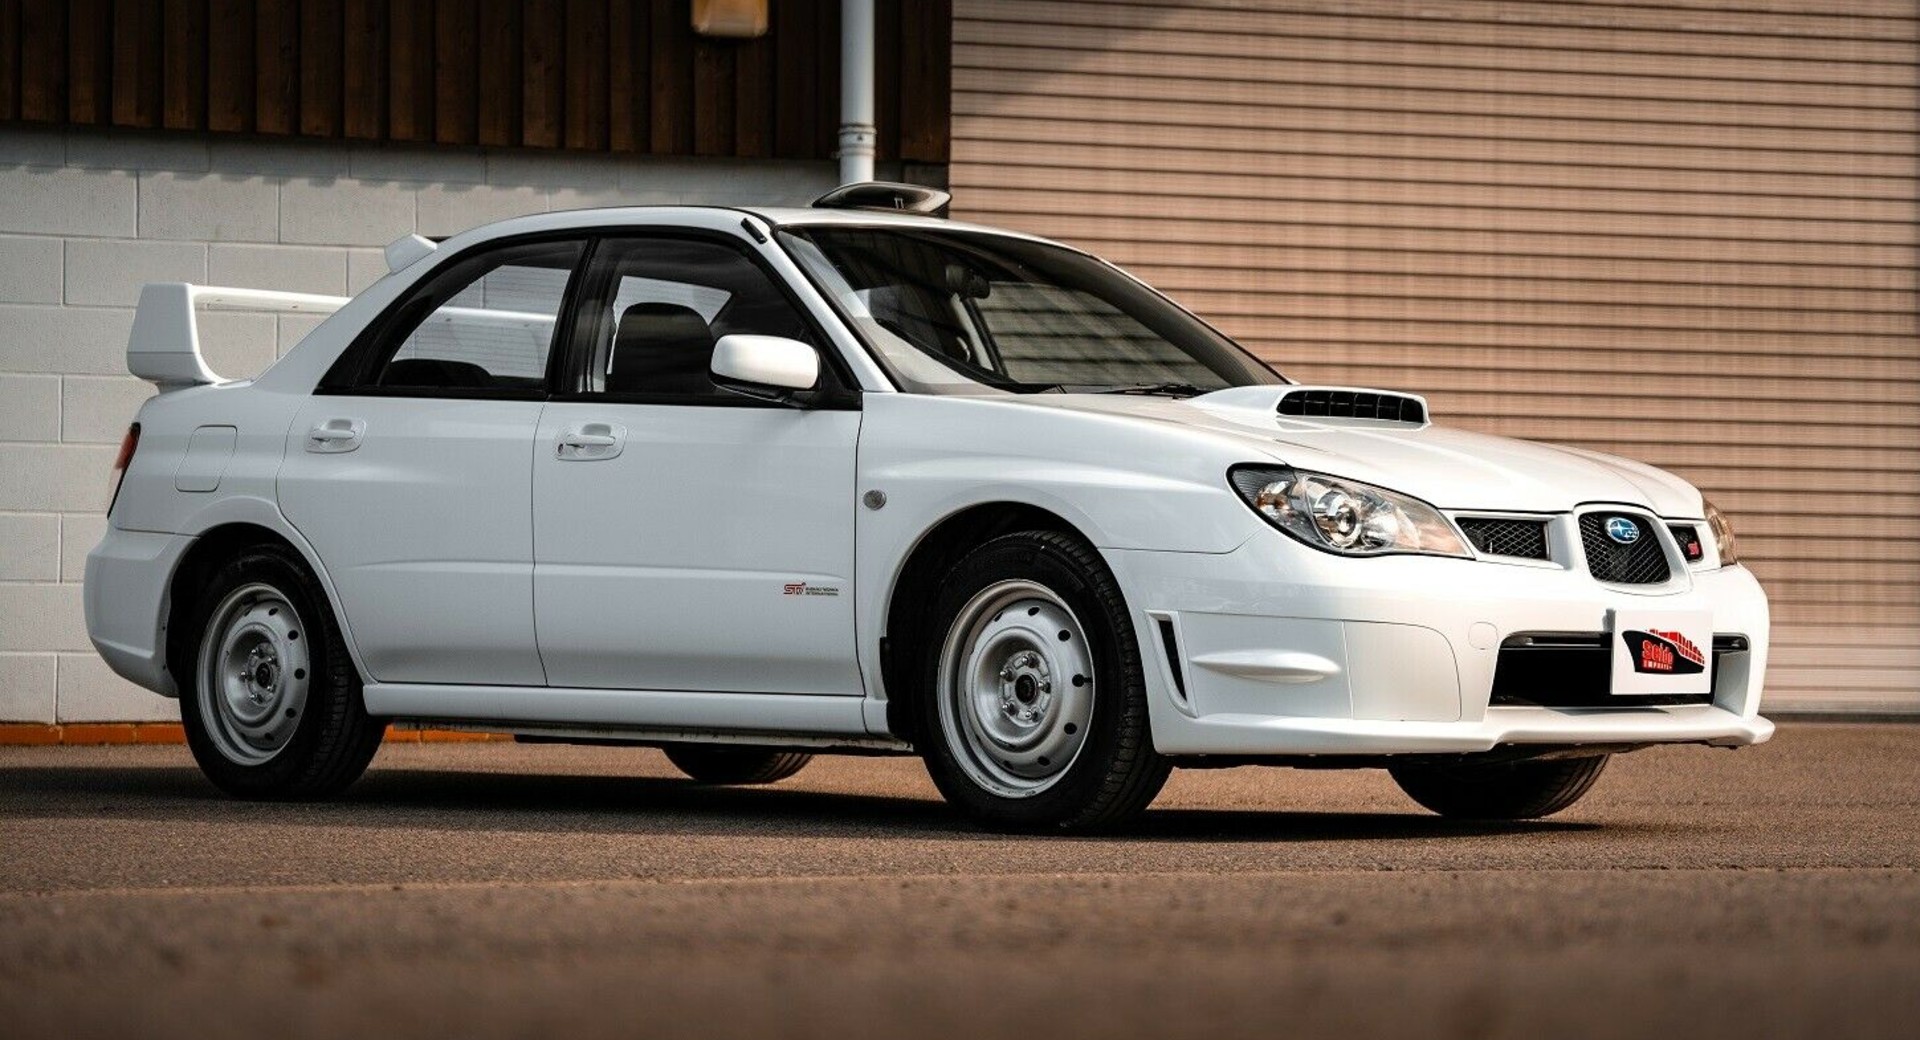 The Rare 2005 Subaru Impreza Wrx Sti Spec C And Steely Want To Go To The Rally - Autobala